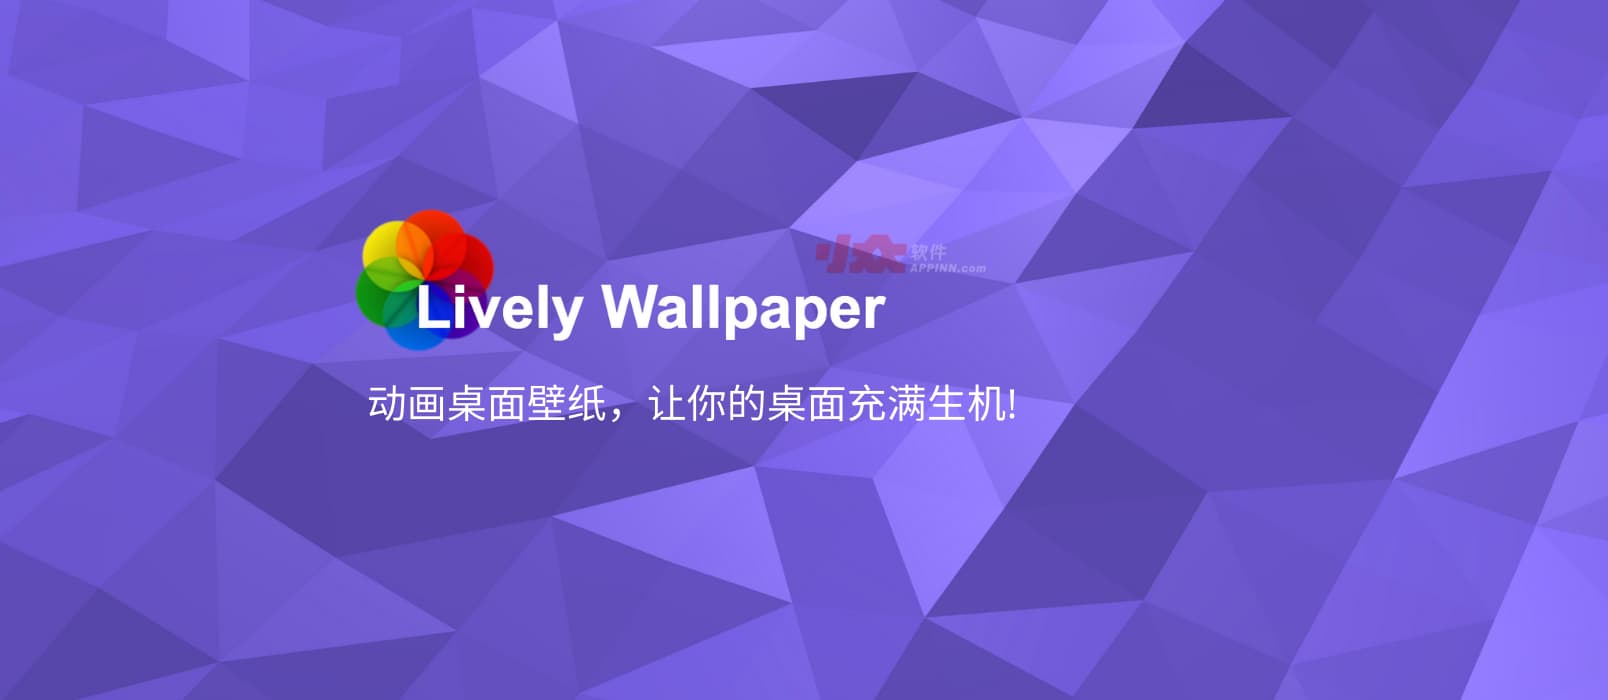 Lively Wallpaper - 为 Windows 创建动态桌面壁纸